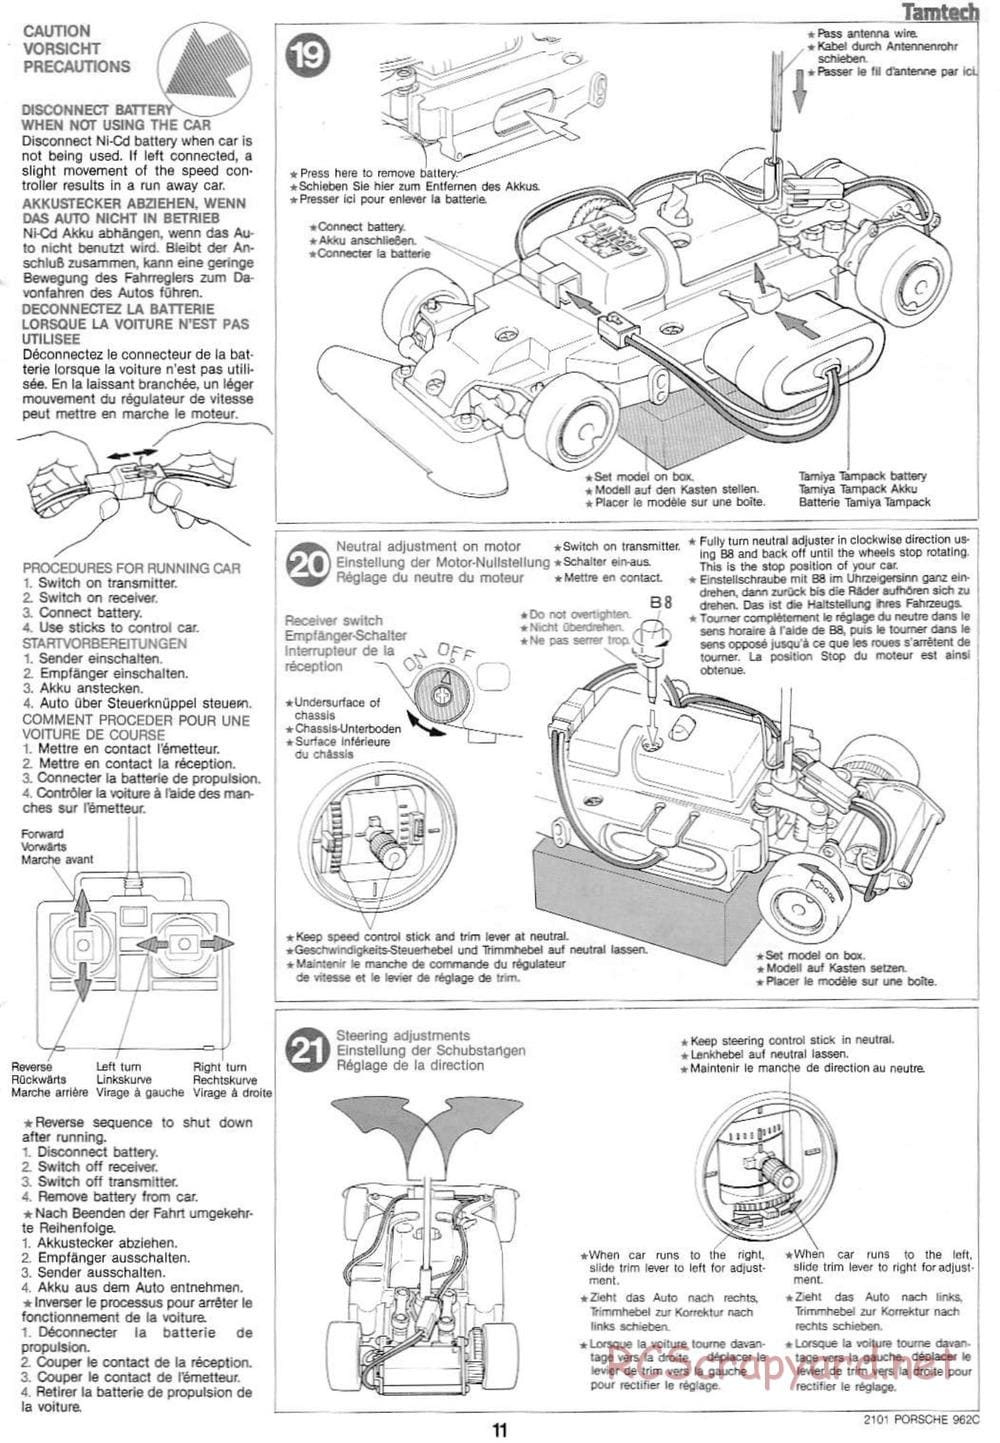 Tamiya - Tamtech - Porsche 962C Chassis - Manual - Page 11